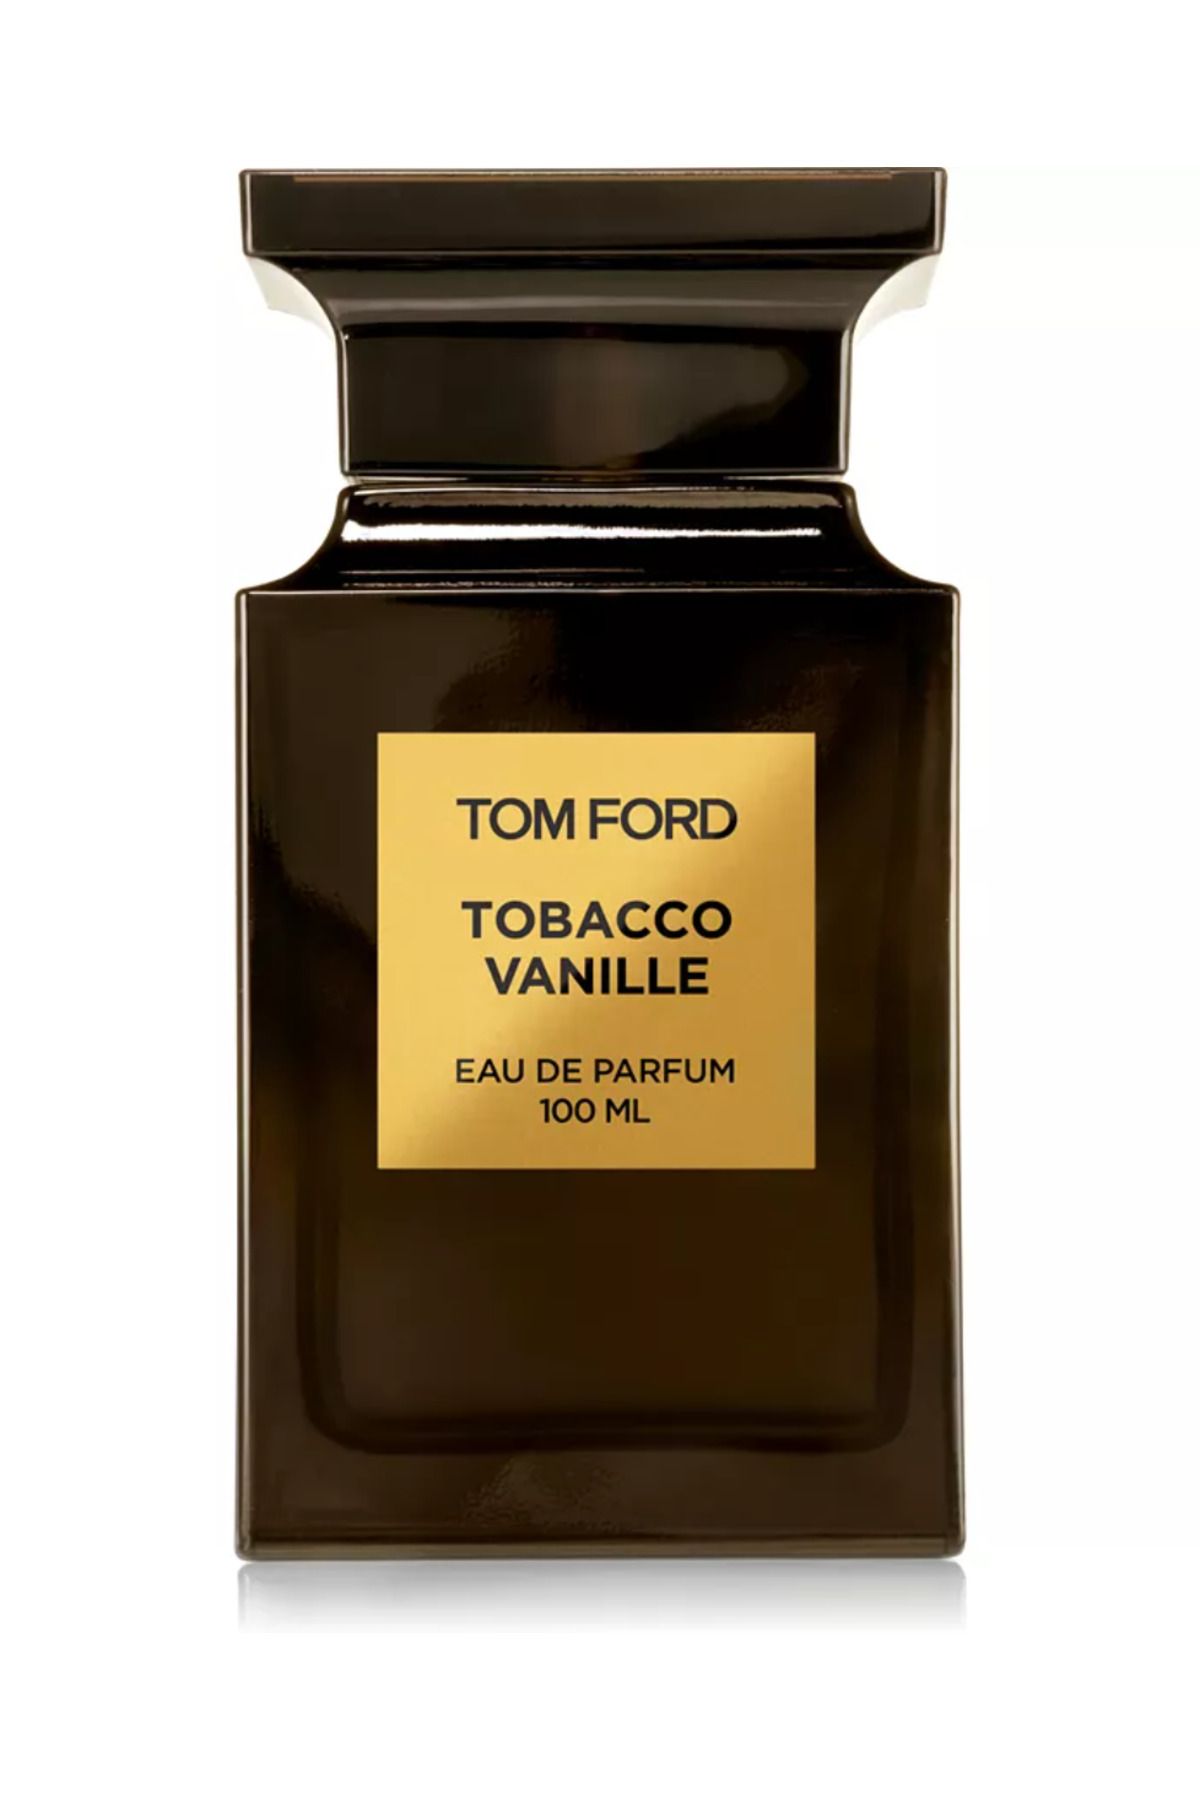 Tom Ford Tobacco Vanille Eau de Parfum 100 Ml